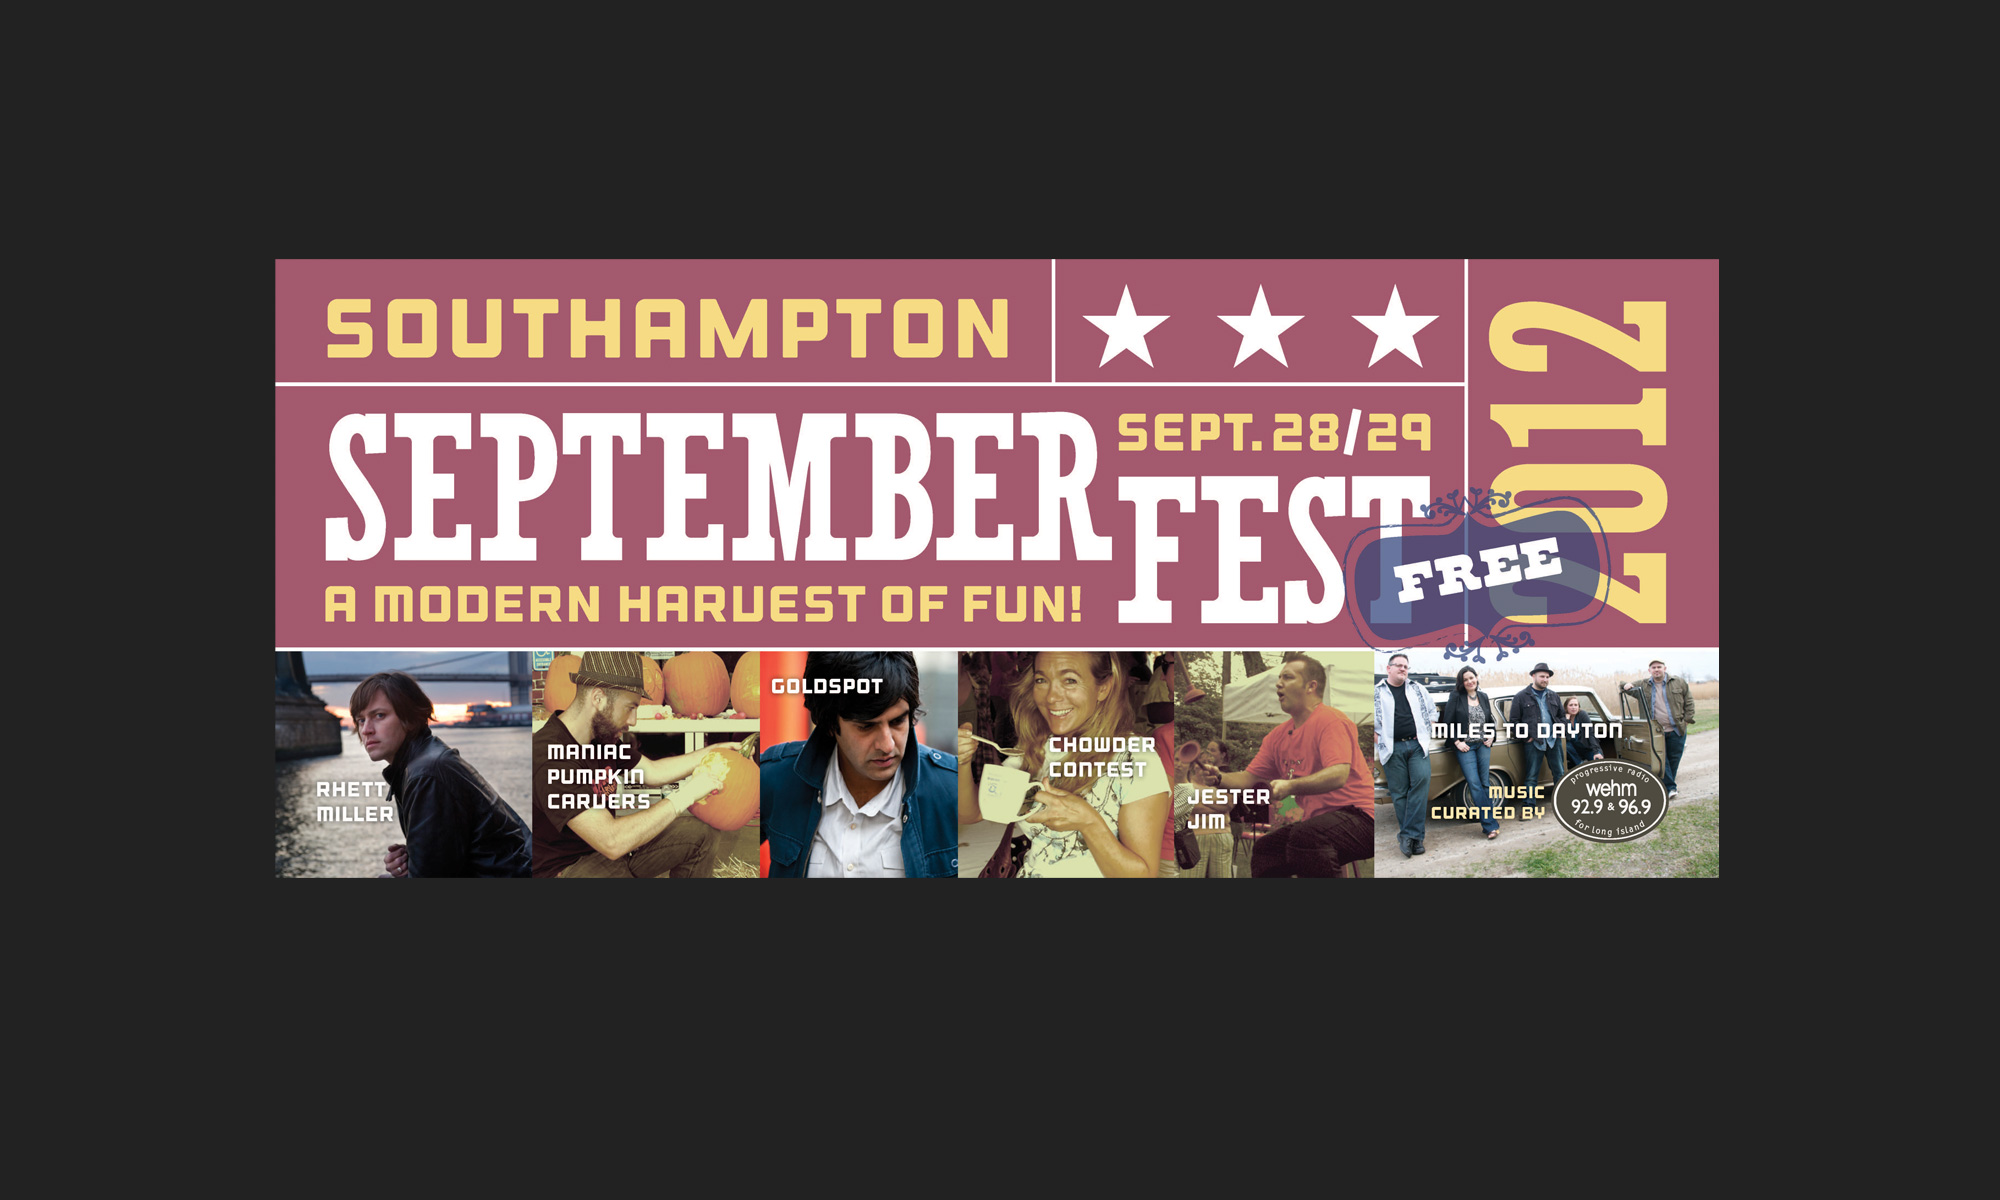 Southampton Septemberfest Postcards